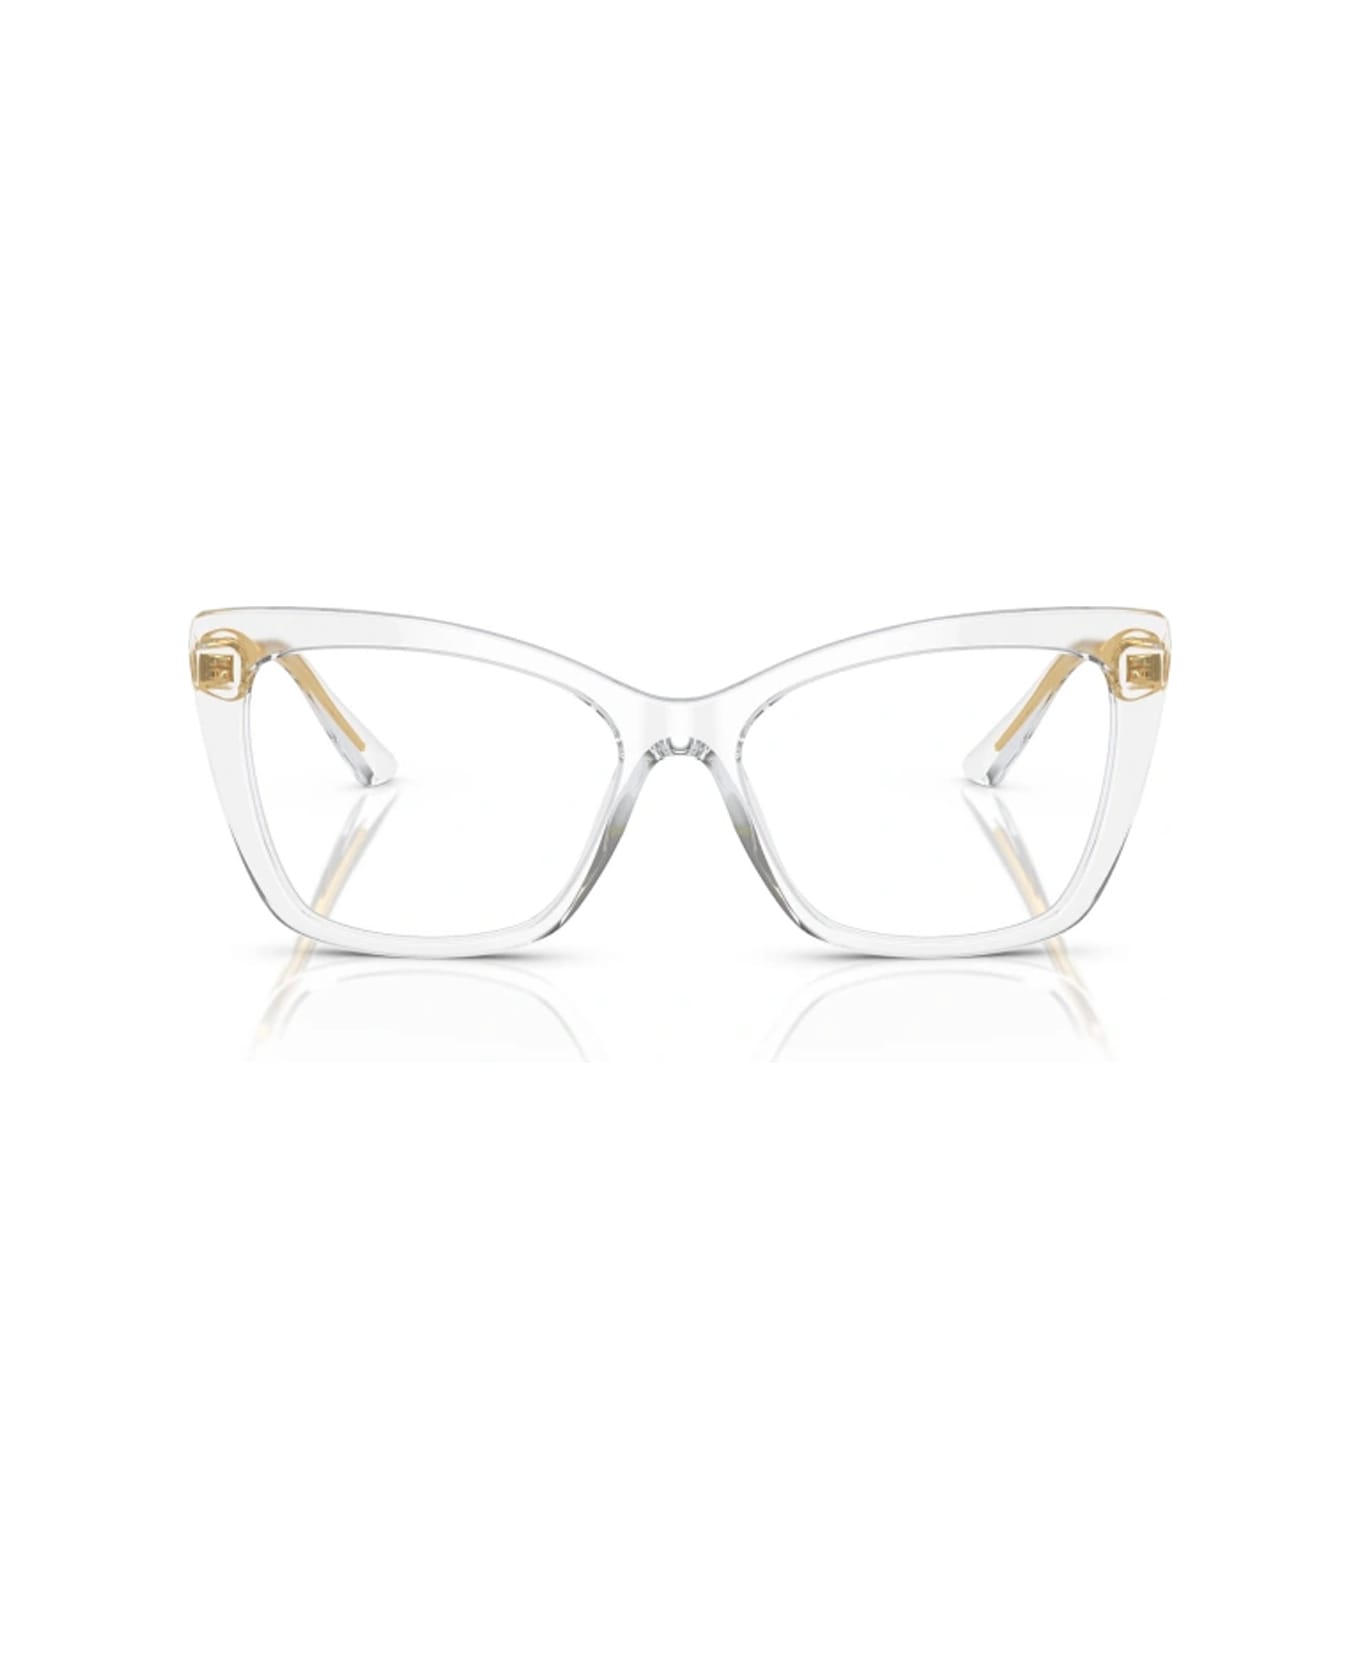 Dolce woman & Gabbana Pre-Owned stretch mini dress Eyewear Dg3348 3133 Glasses - Trasparente